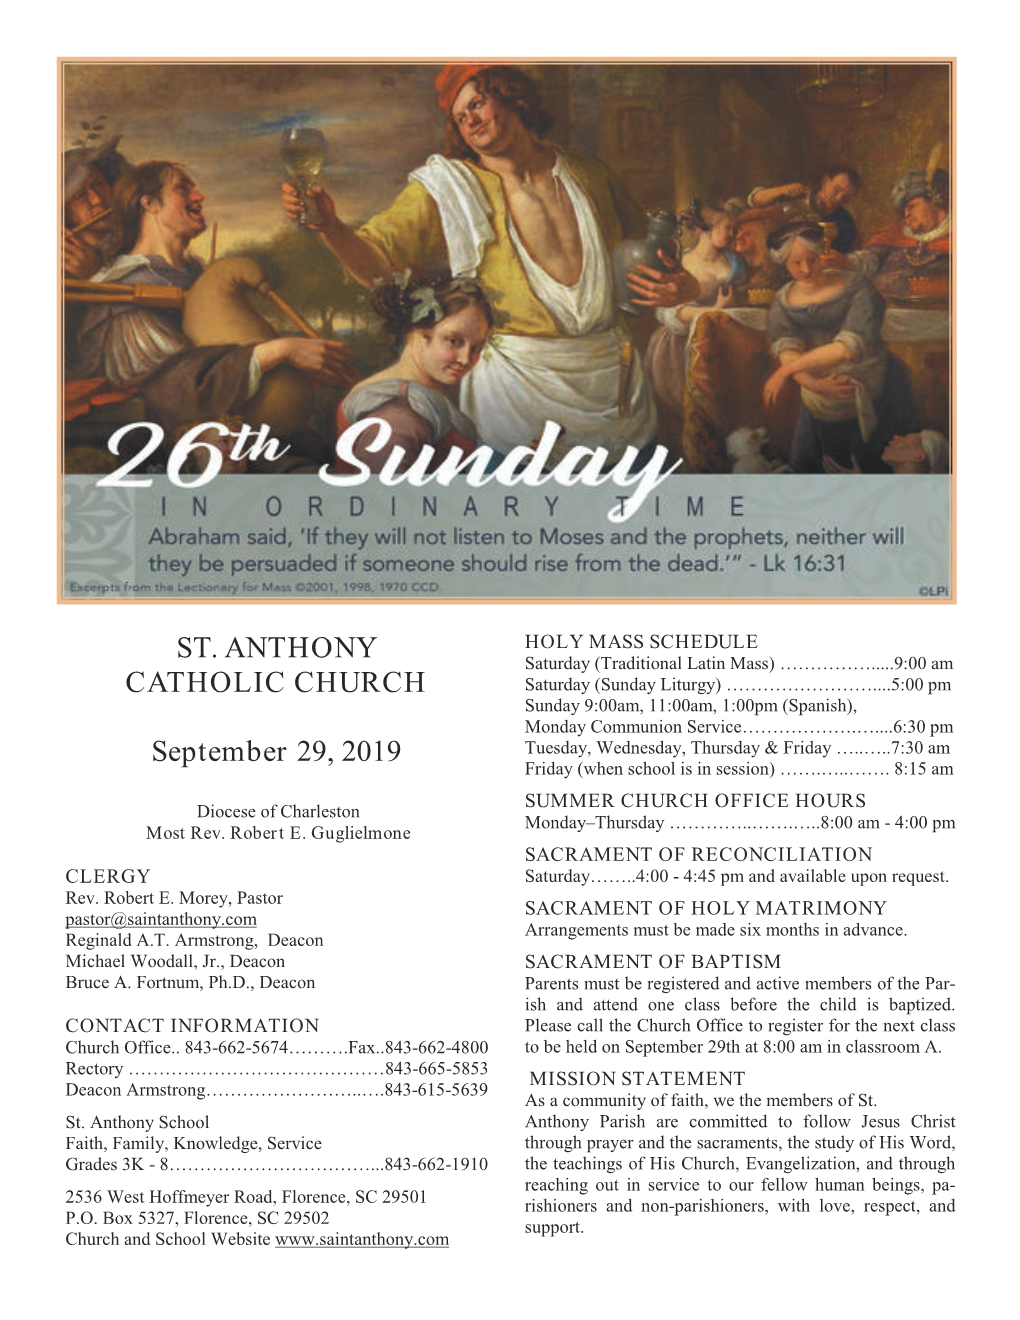 ST. ANTHONY CATHOLIC CHURCH September 29, 2019